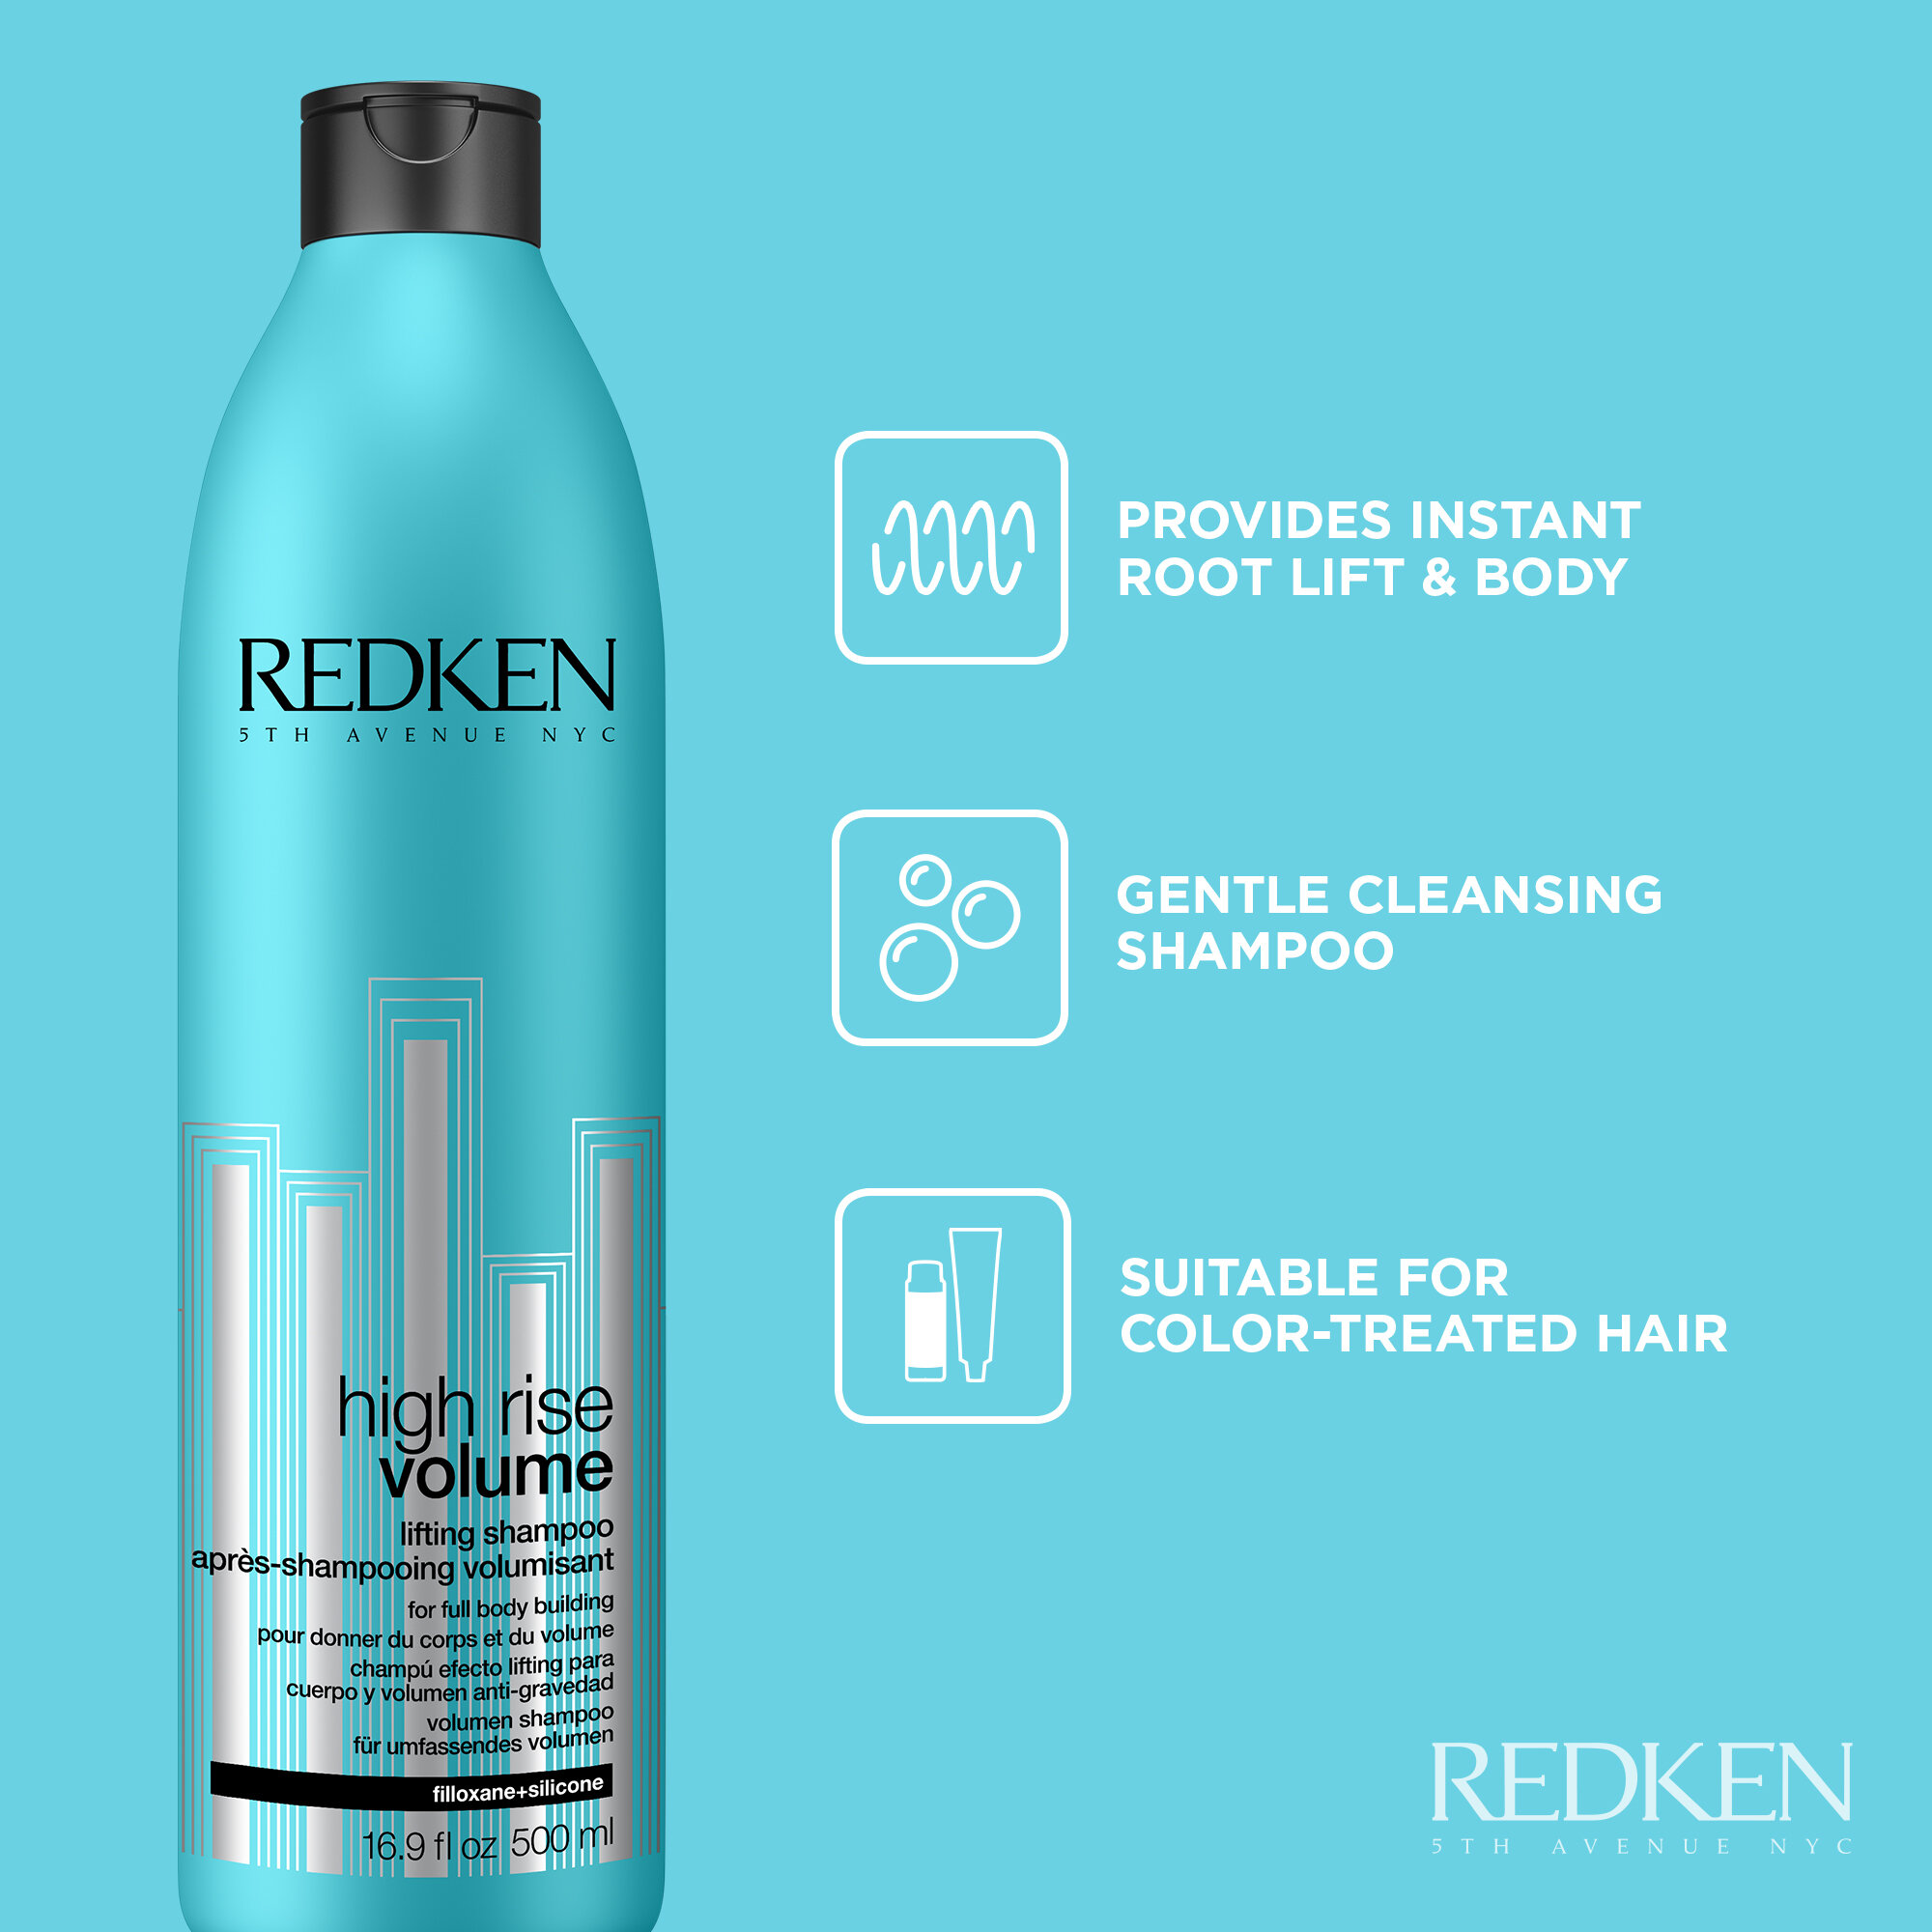 Redken-2020-EU-500ml-High-Rise-Volume-Shampoo-Benefits-Template-2000x2000.jpg